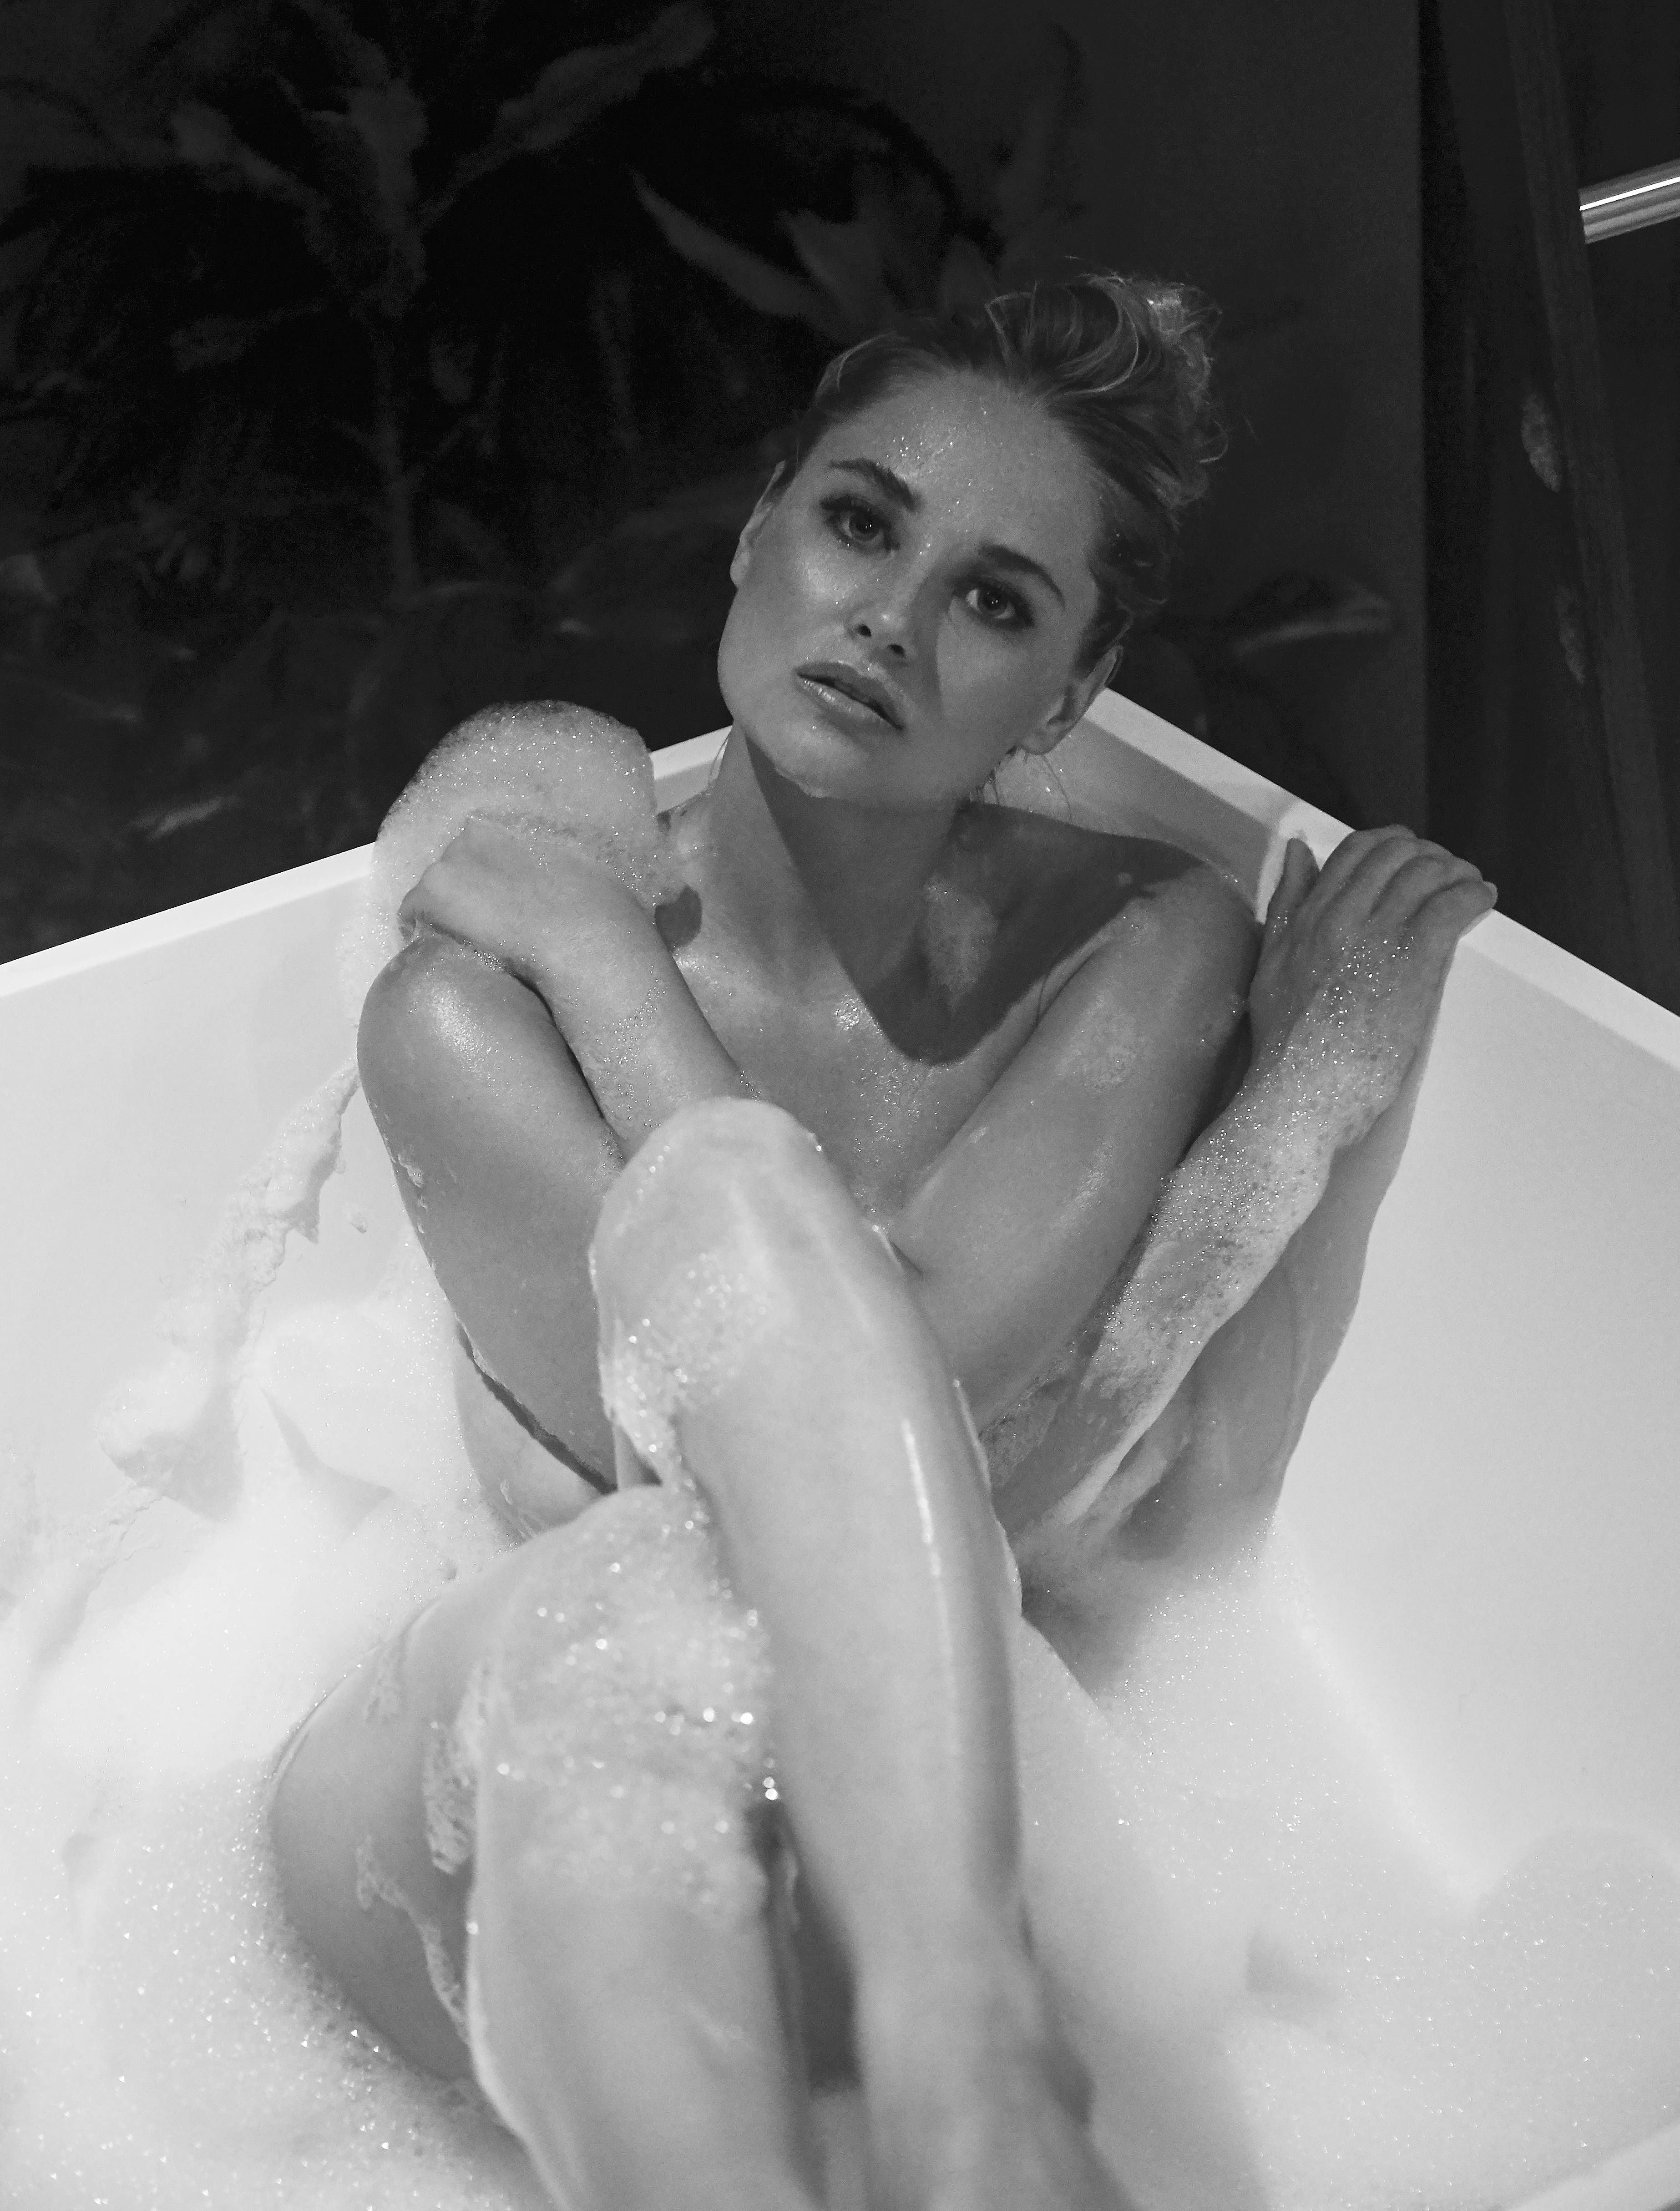 Genevieve morton bathtub series - 🧡 OJMrC6N.jpg ImageBan.ru - Надёжный фот...